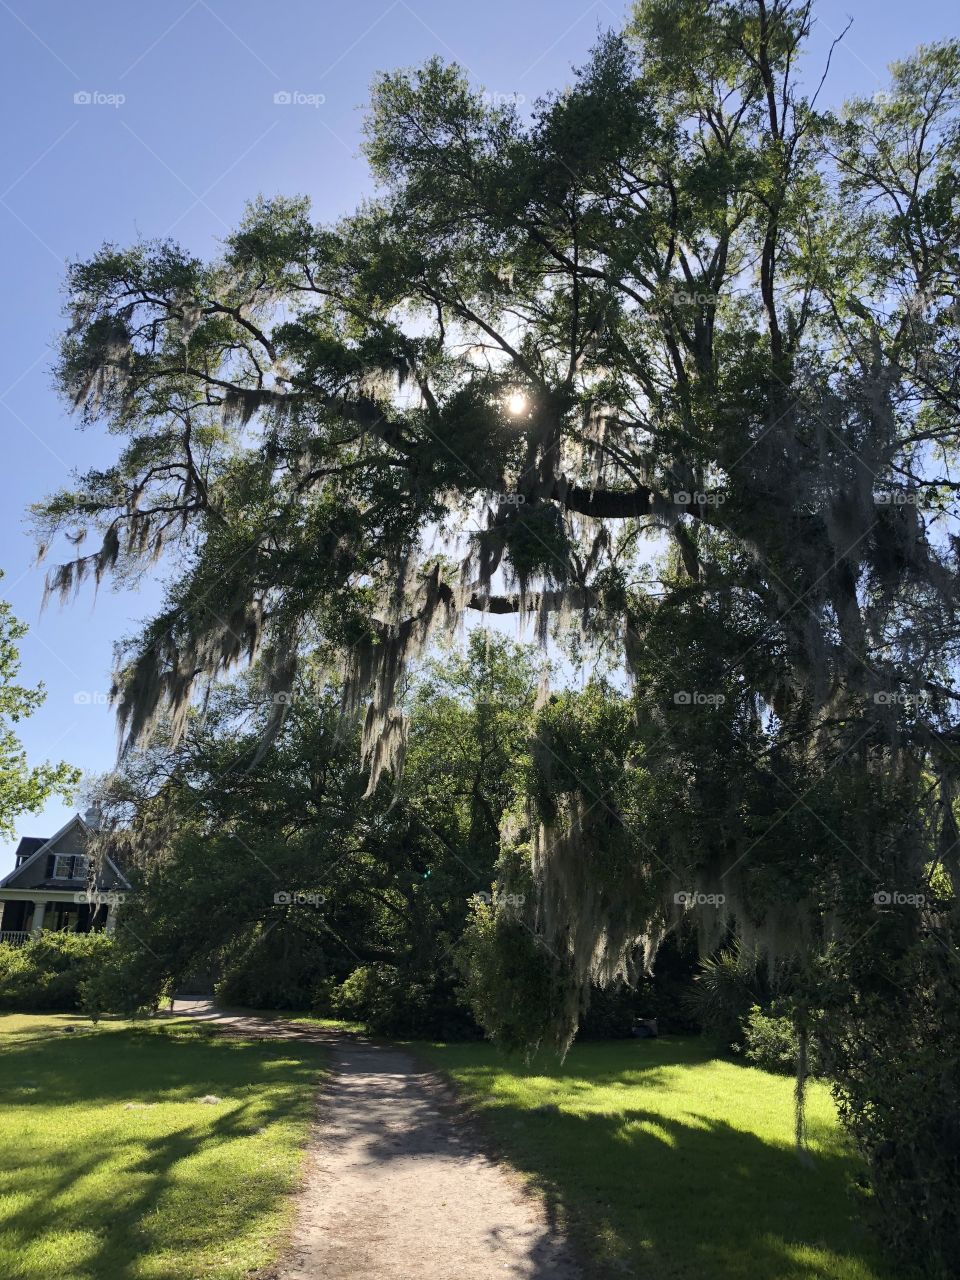 Spanish moss on tree, Magnolia plantation, South Carolina